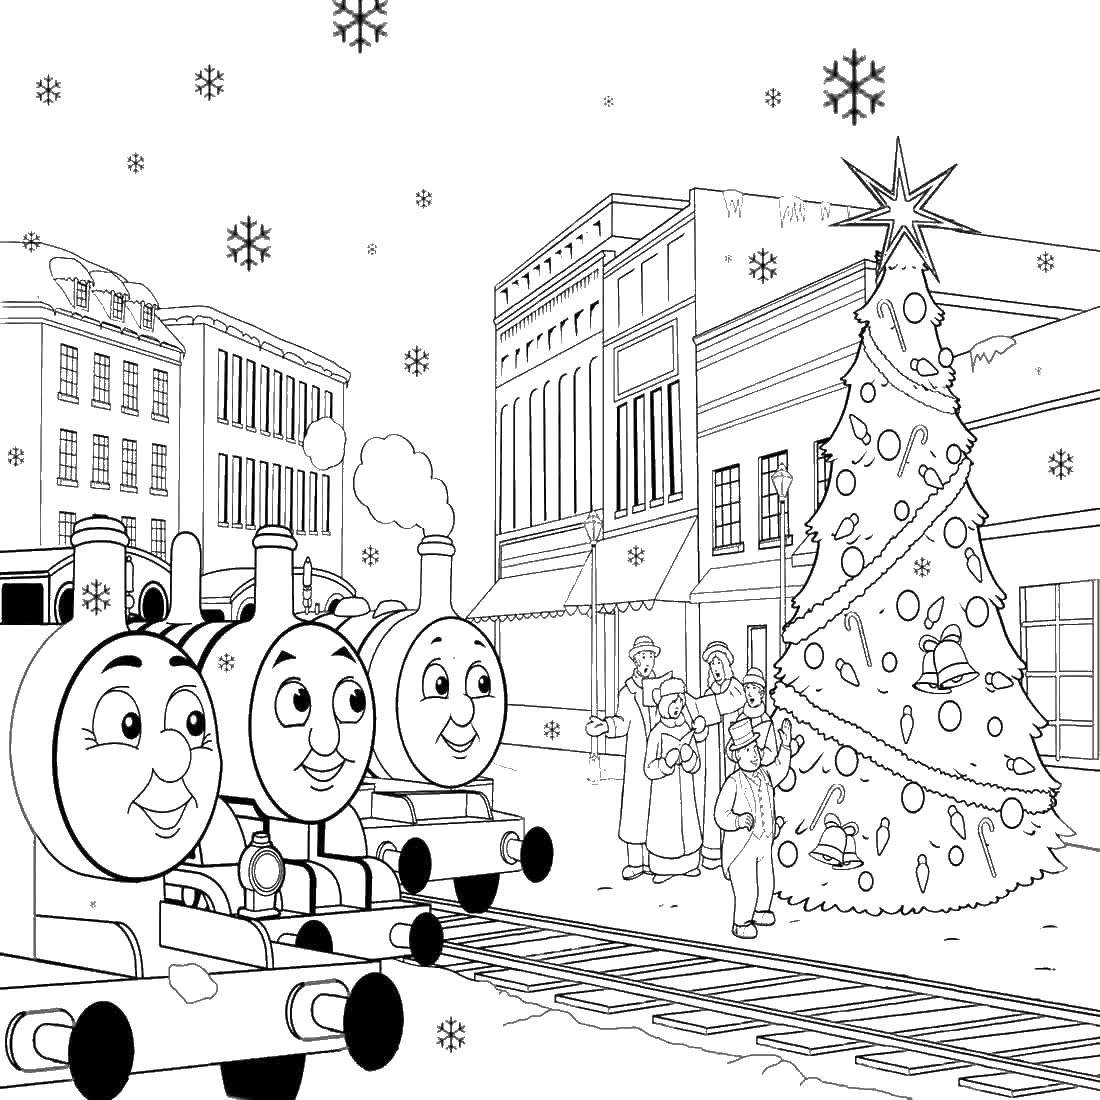 Название: Раскраска Рождество в городе. Категория: рождество. Теги: елка, паровоз, люди.